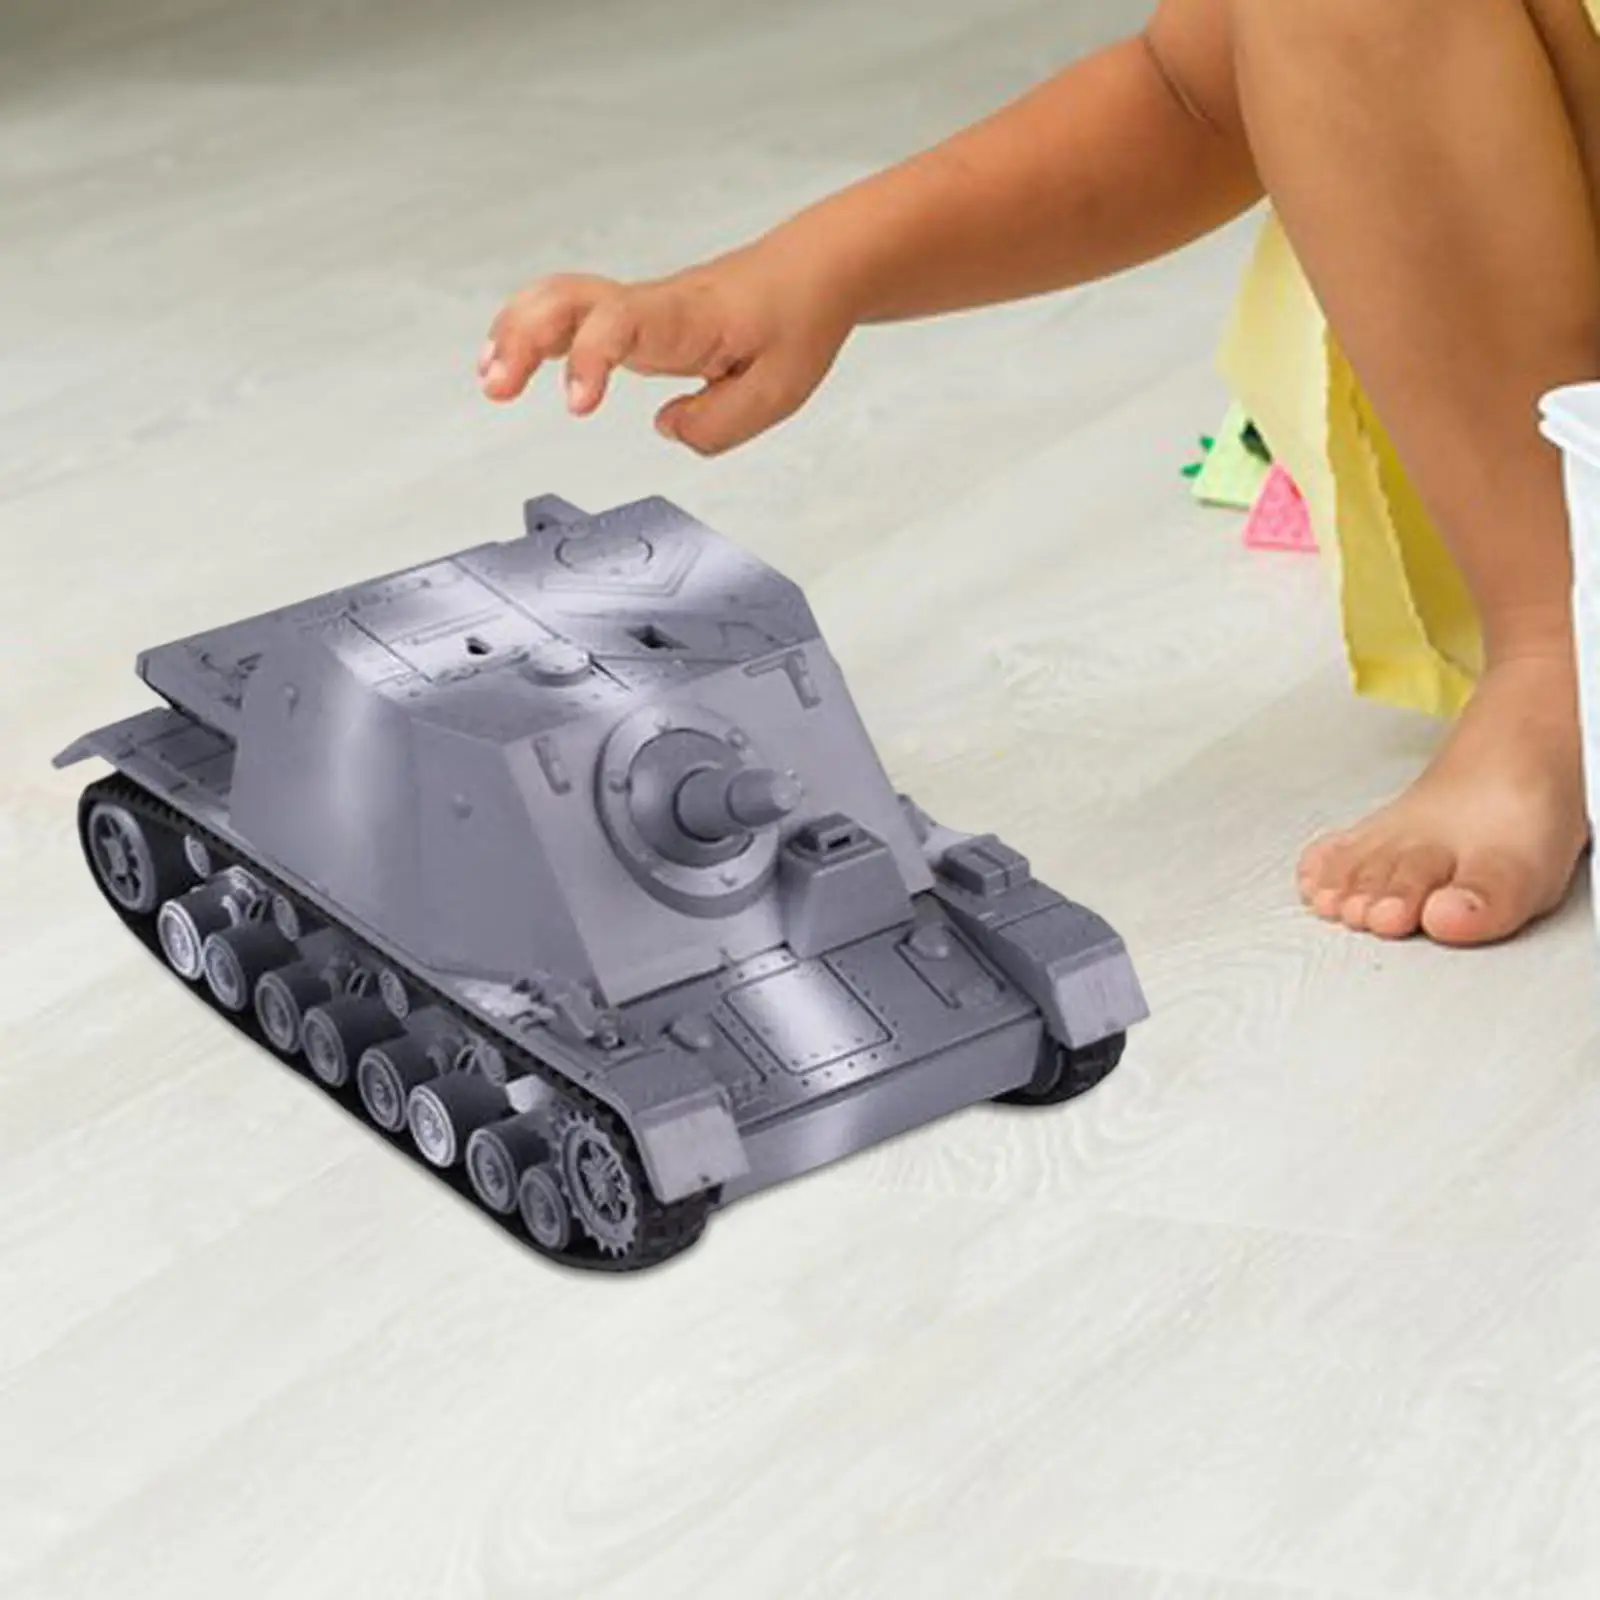 Tank Model Kit, 4D Puzzles Model Building Kits Action Model for Boys Children Kids